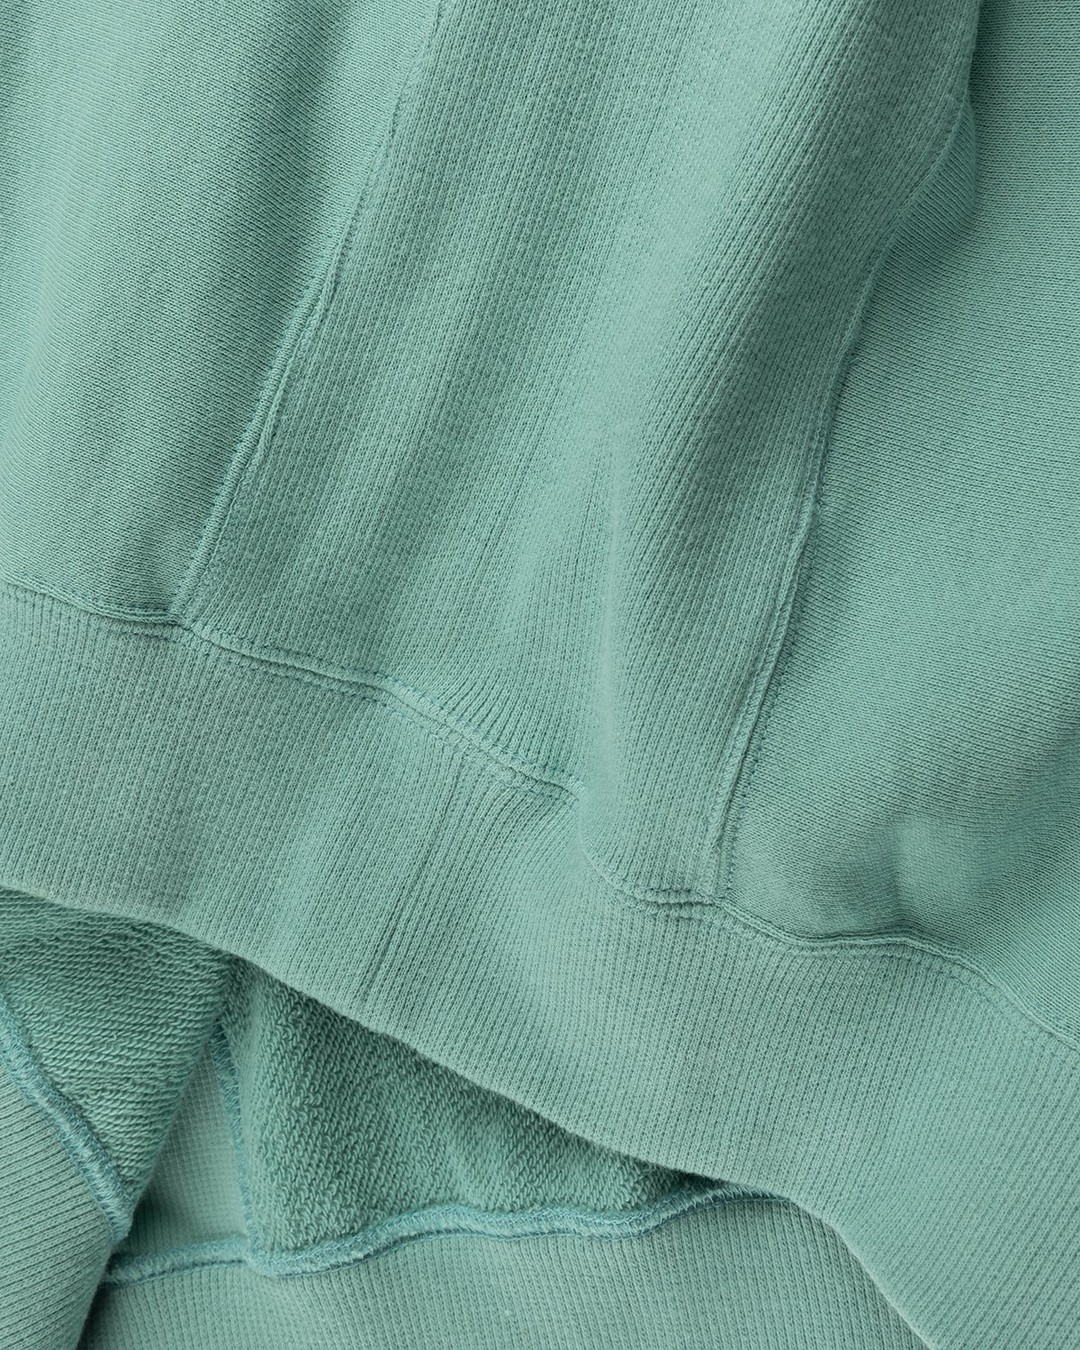 Nanzuka x Roby x Highsnobiety – Crewneck Turquoise - Sweatshirts - Green - Image 6